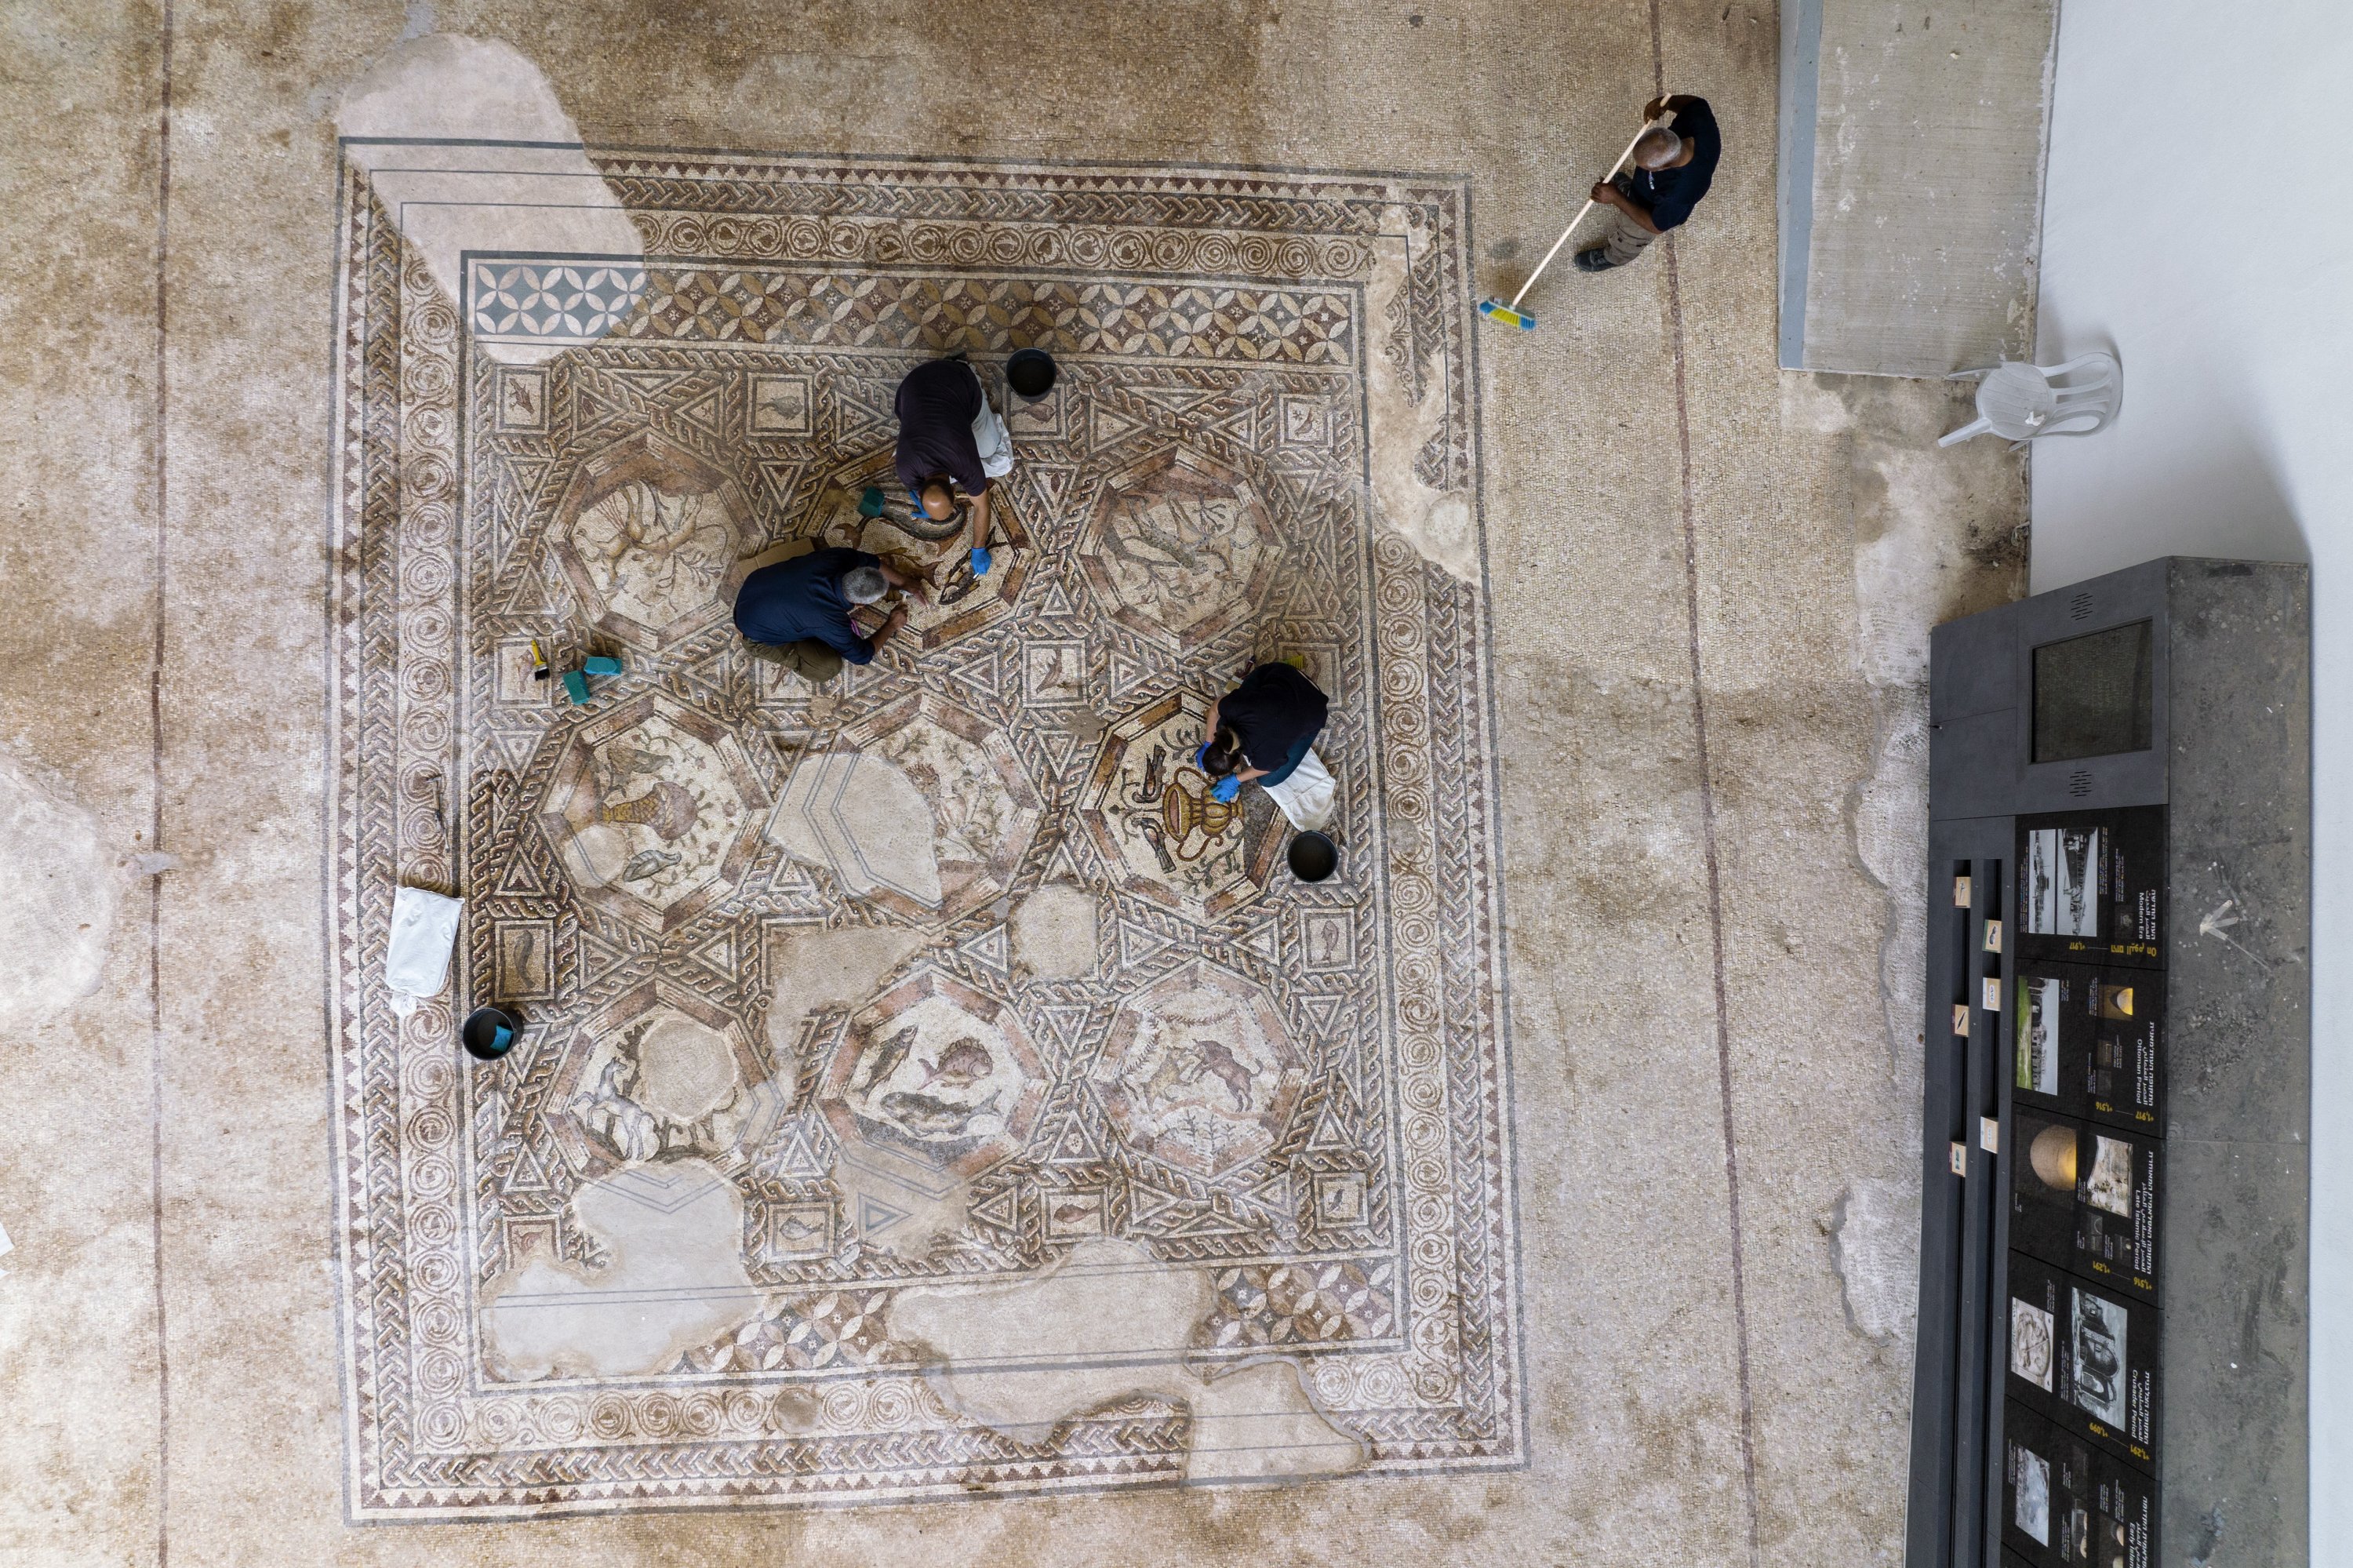 The Lod Roman Mosaic